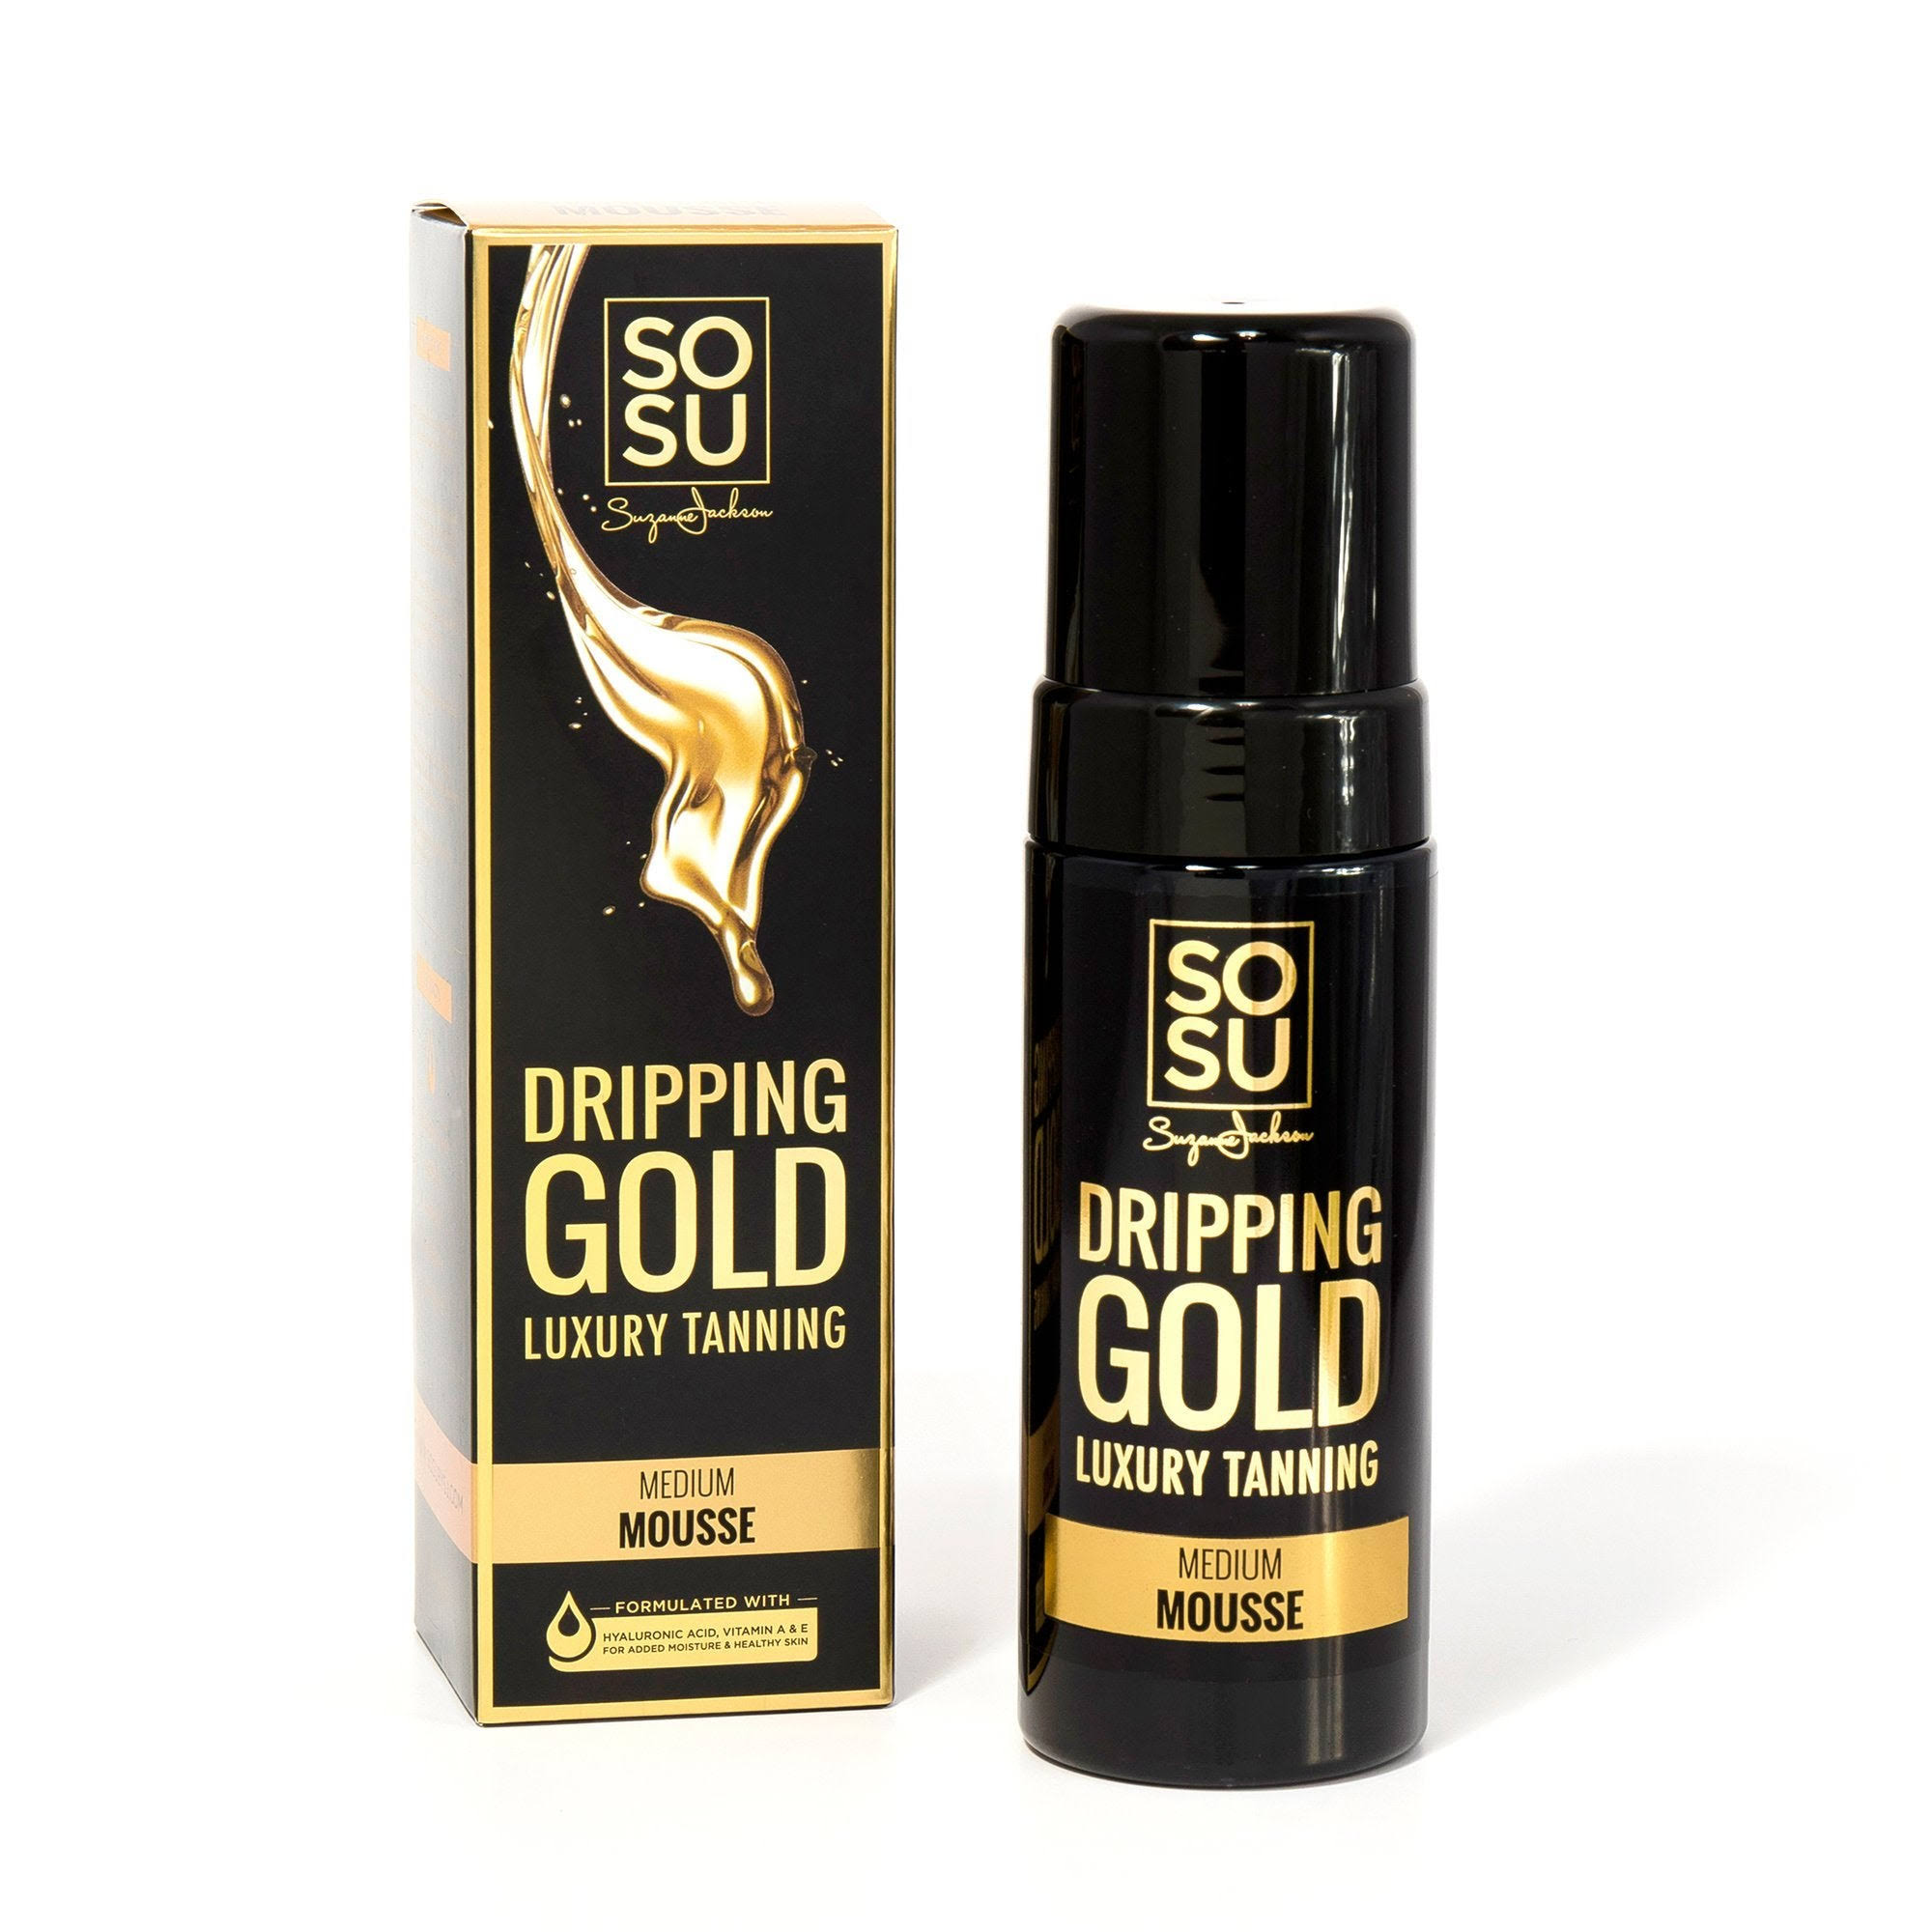 SOSU Dripping Gold - Mousse - Medium Luxury Tanning